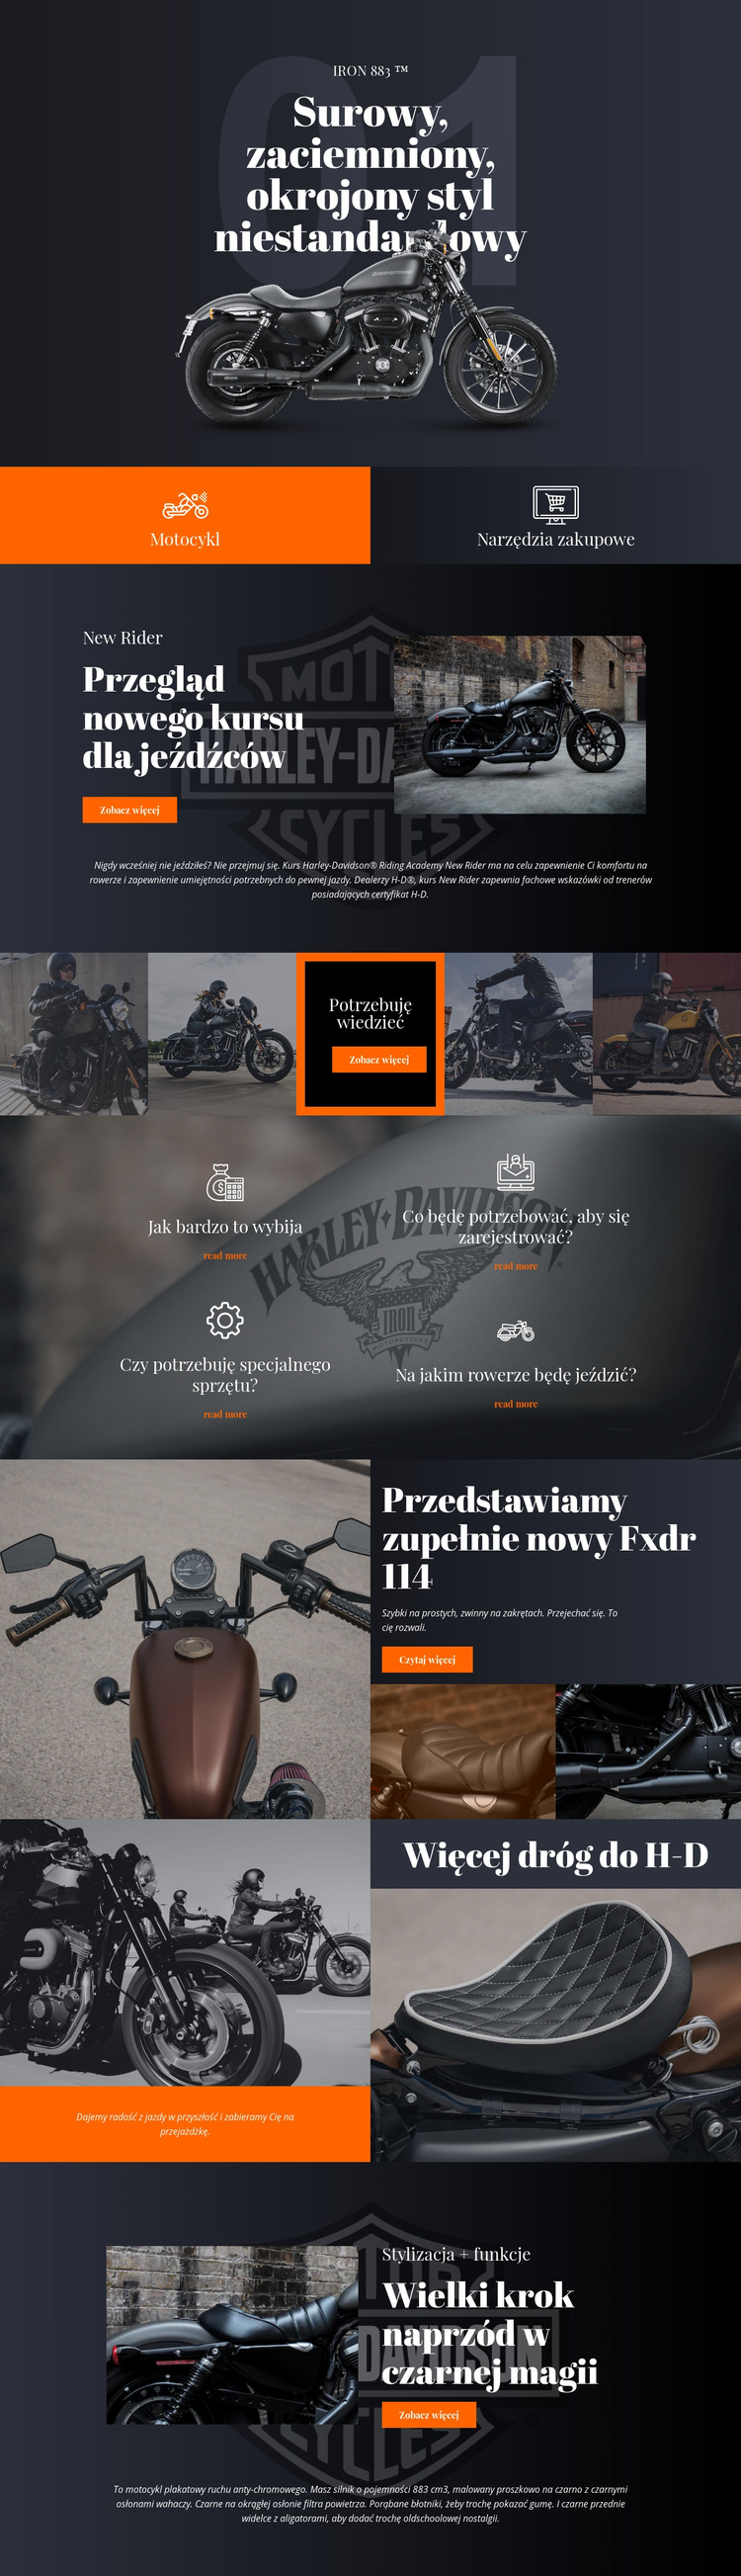 Harley Davidson Motyw WordPress